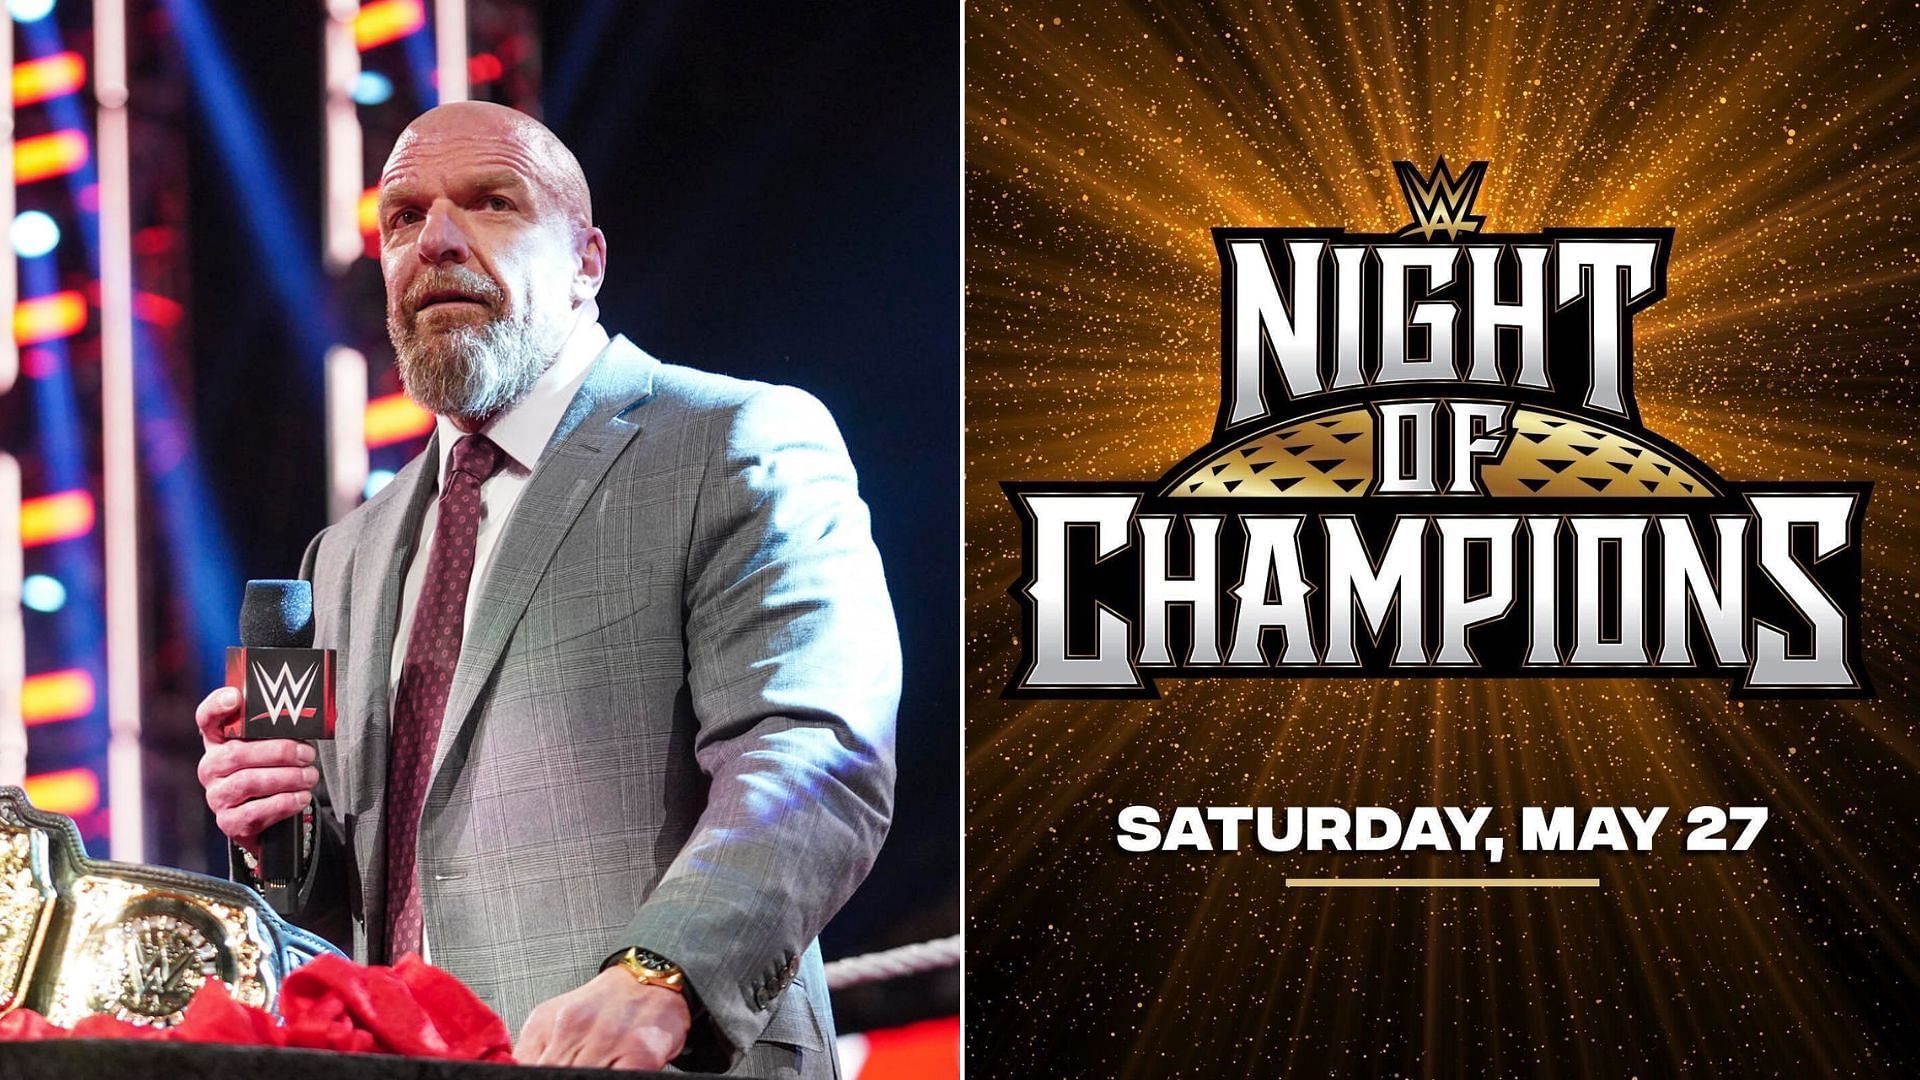 Triple H introduced a new World Heavyweight Championship on WWE RAW!